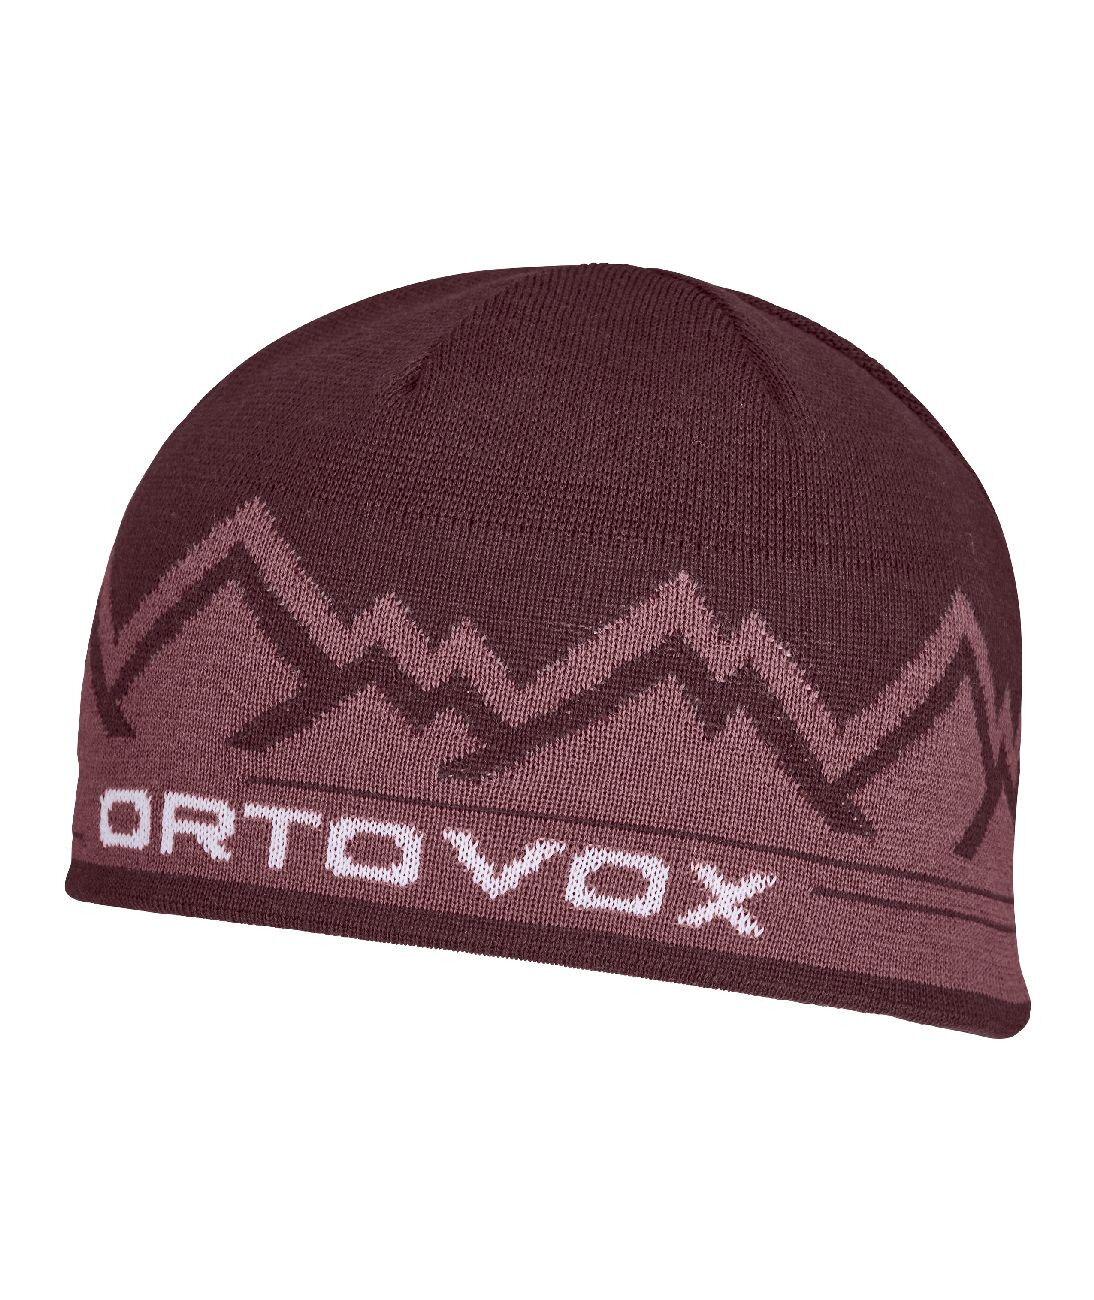 Ortovox Peak Beanie - Pipo